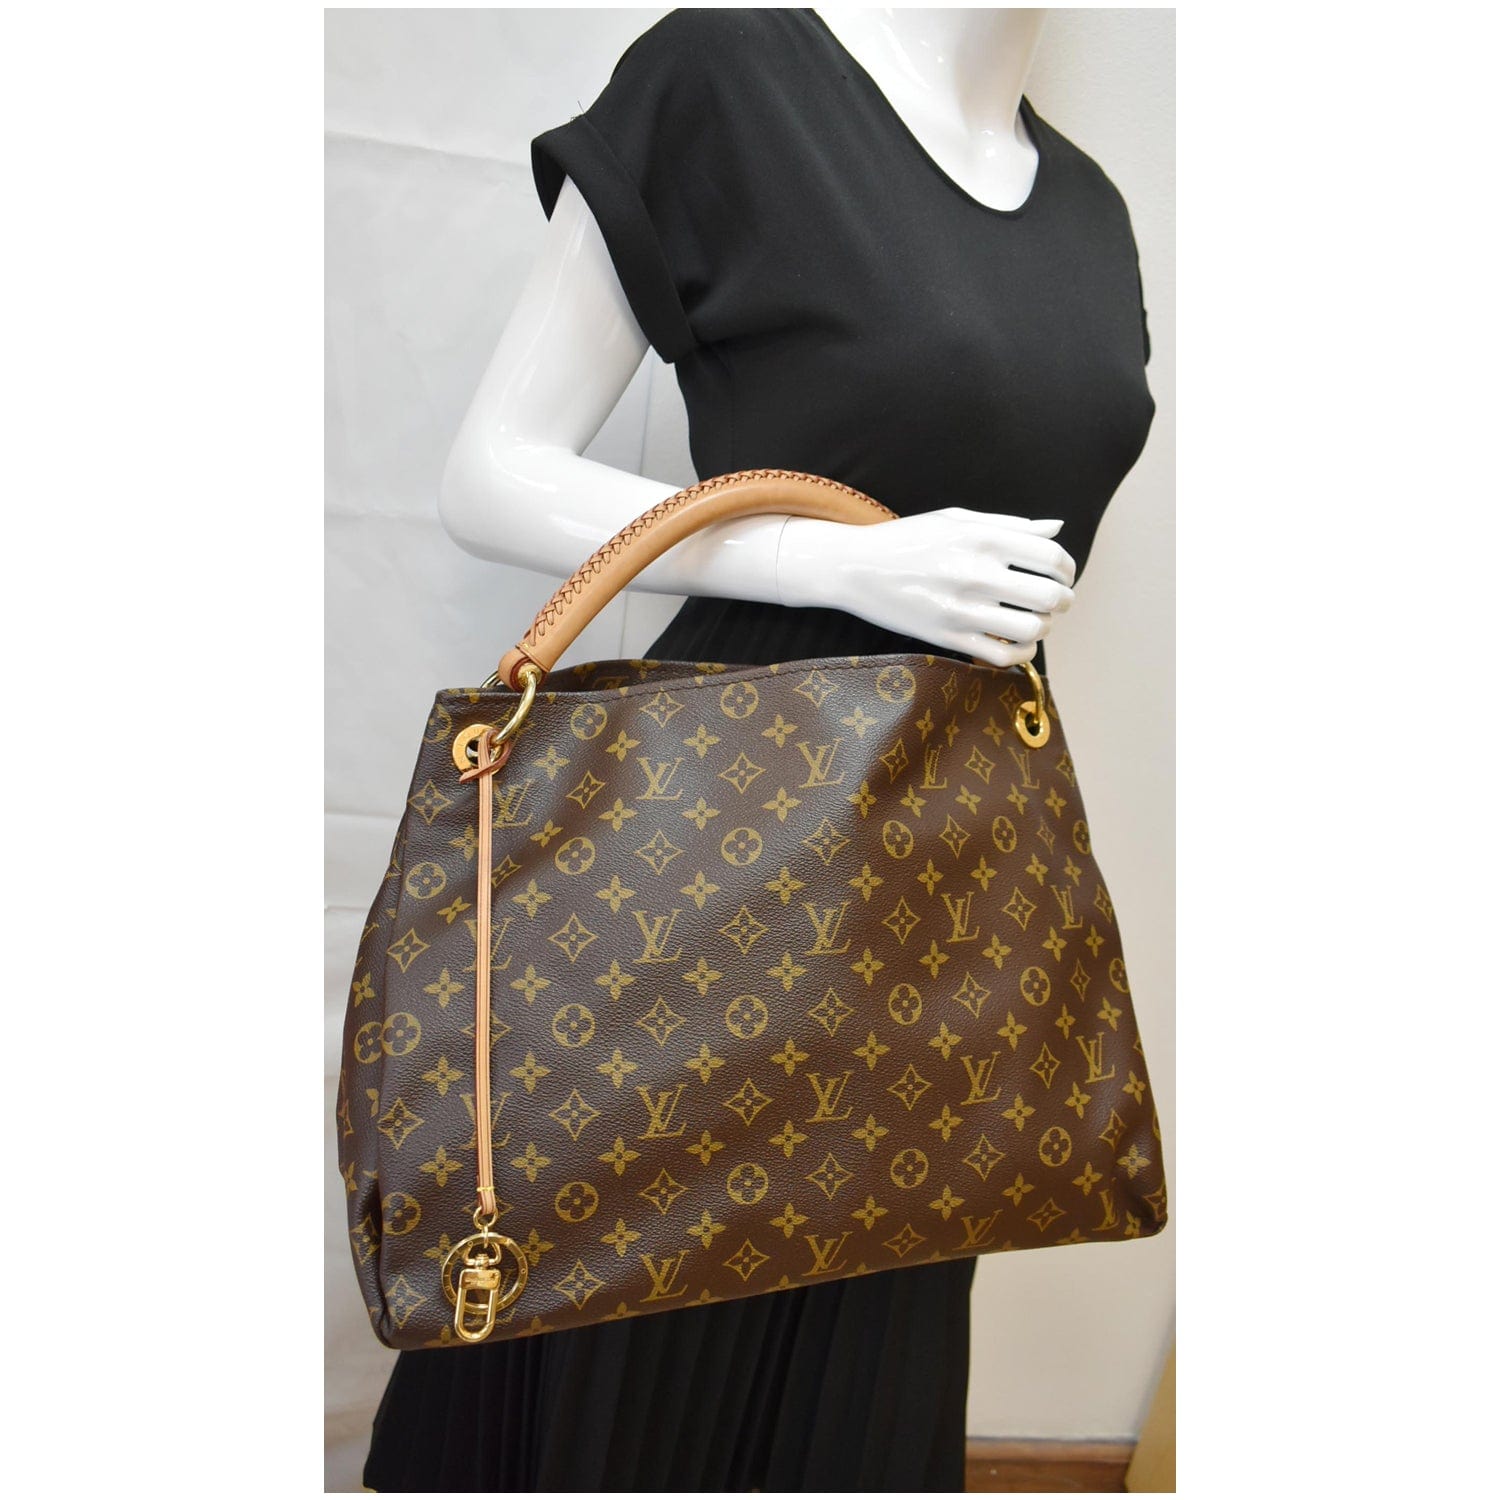 Louis Vuitton Artsy MM M40249 Handbags